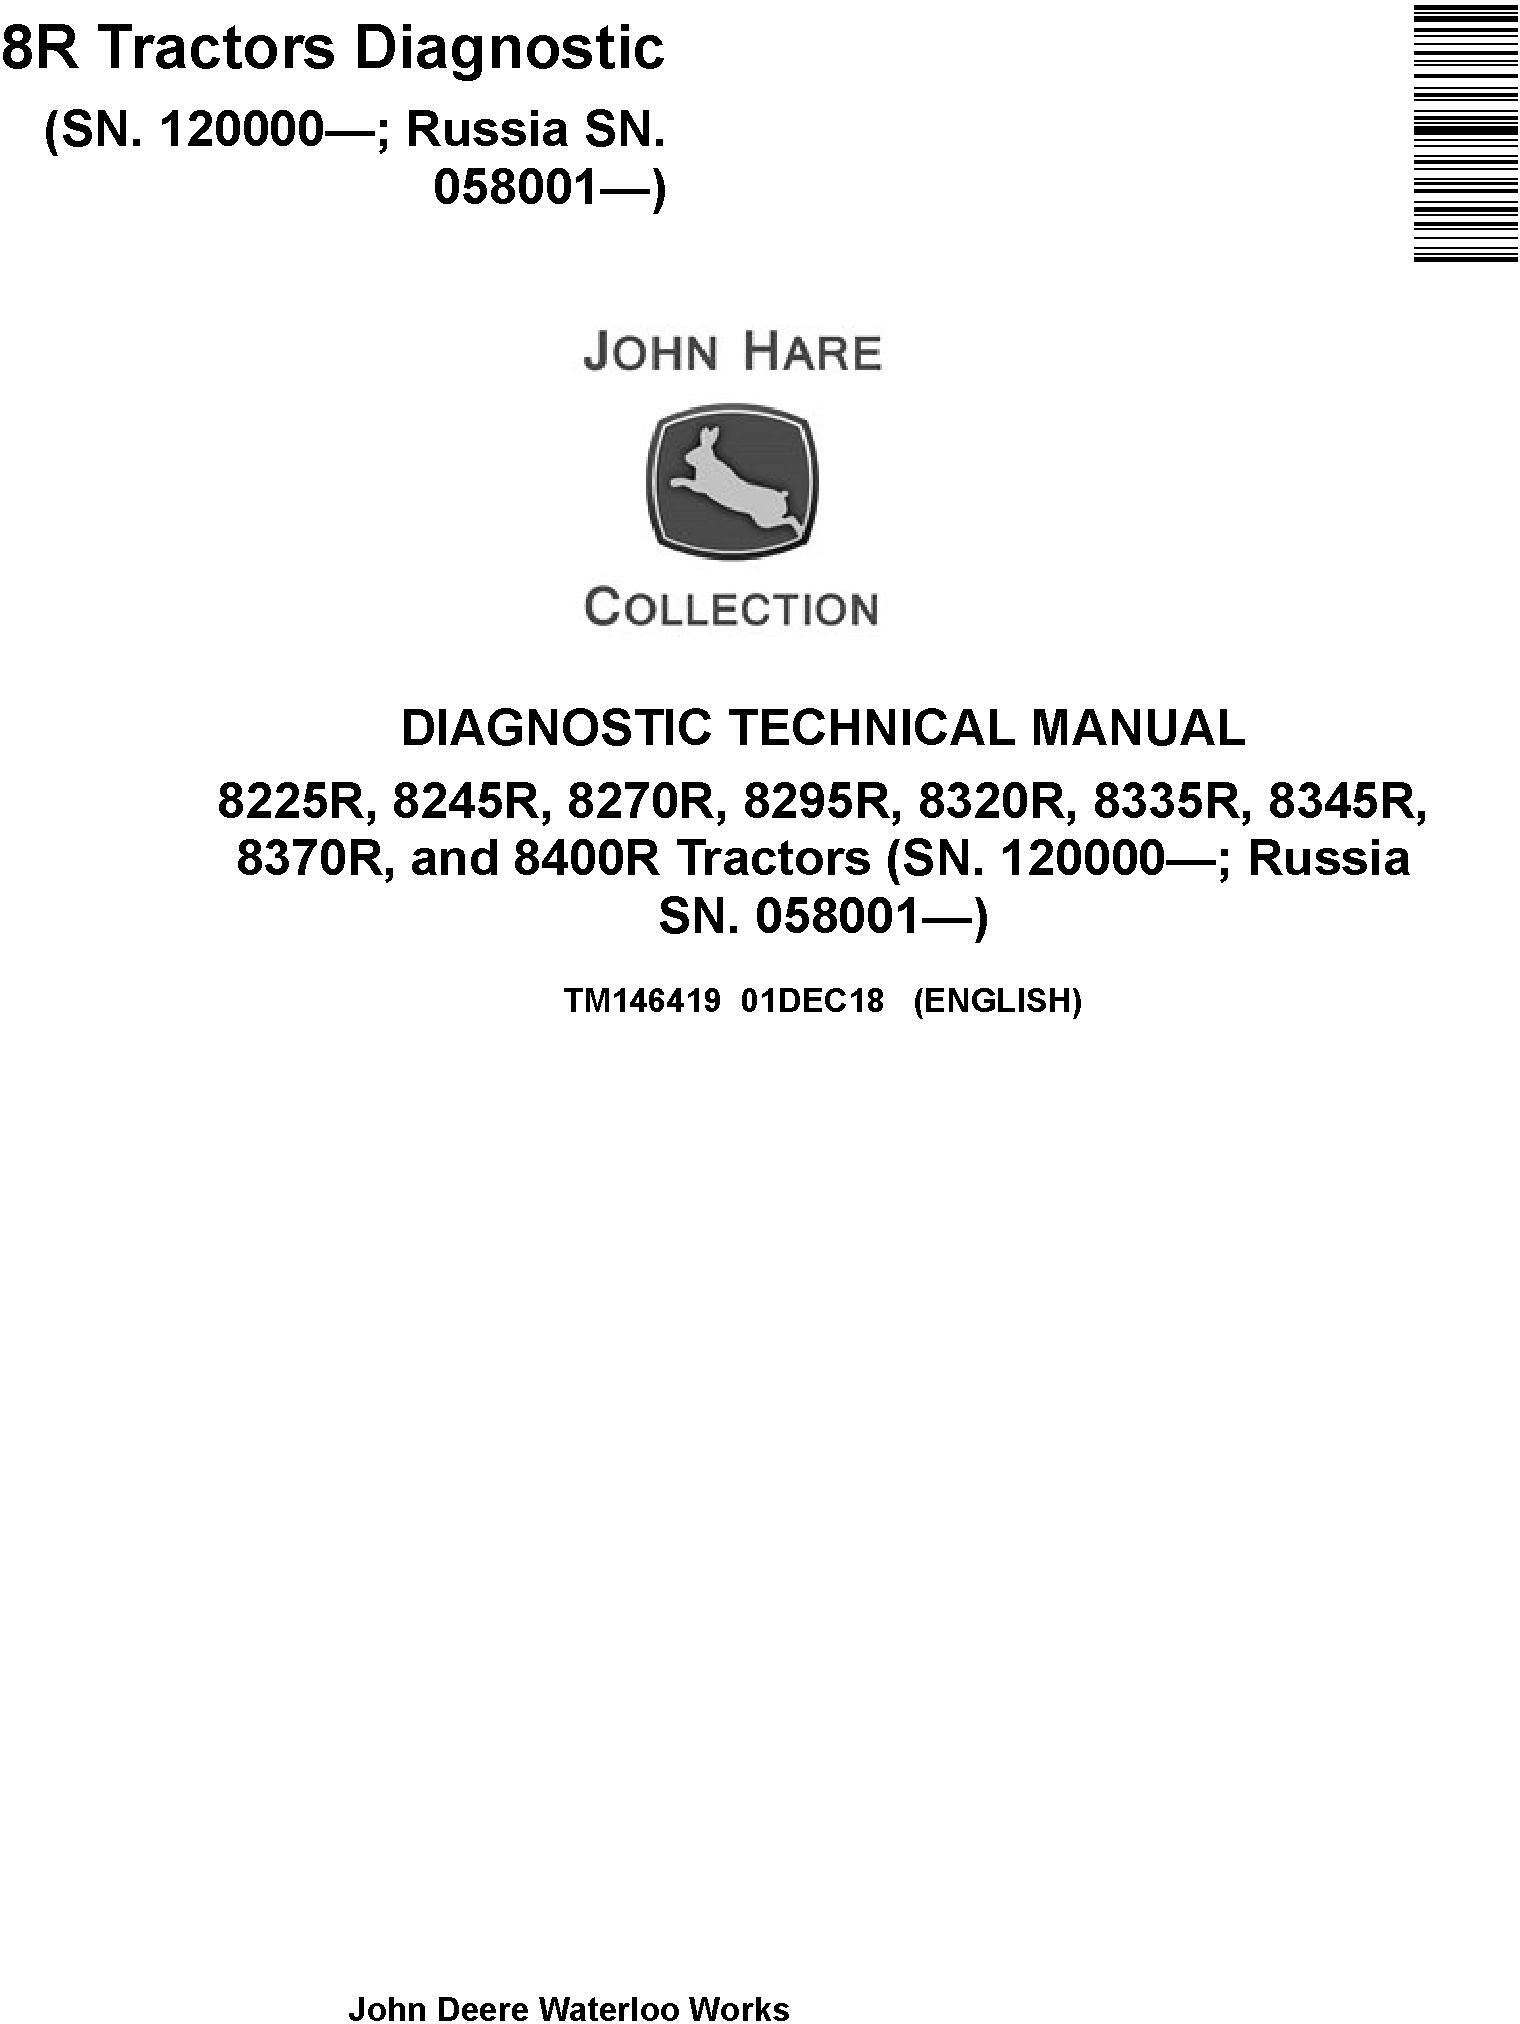 John Deere 8225R 8245R 8270R 8295R 8320R 8335R 8345R 8370R 8400R Tractors Diagnostic Manual TM146419 - 19096